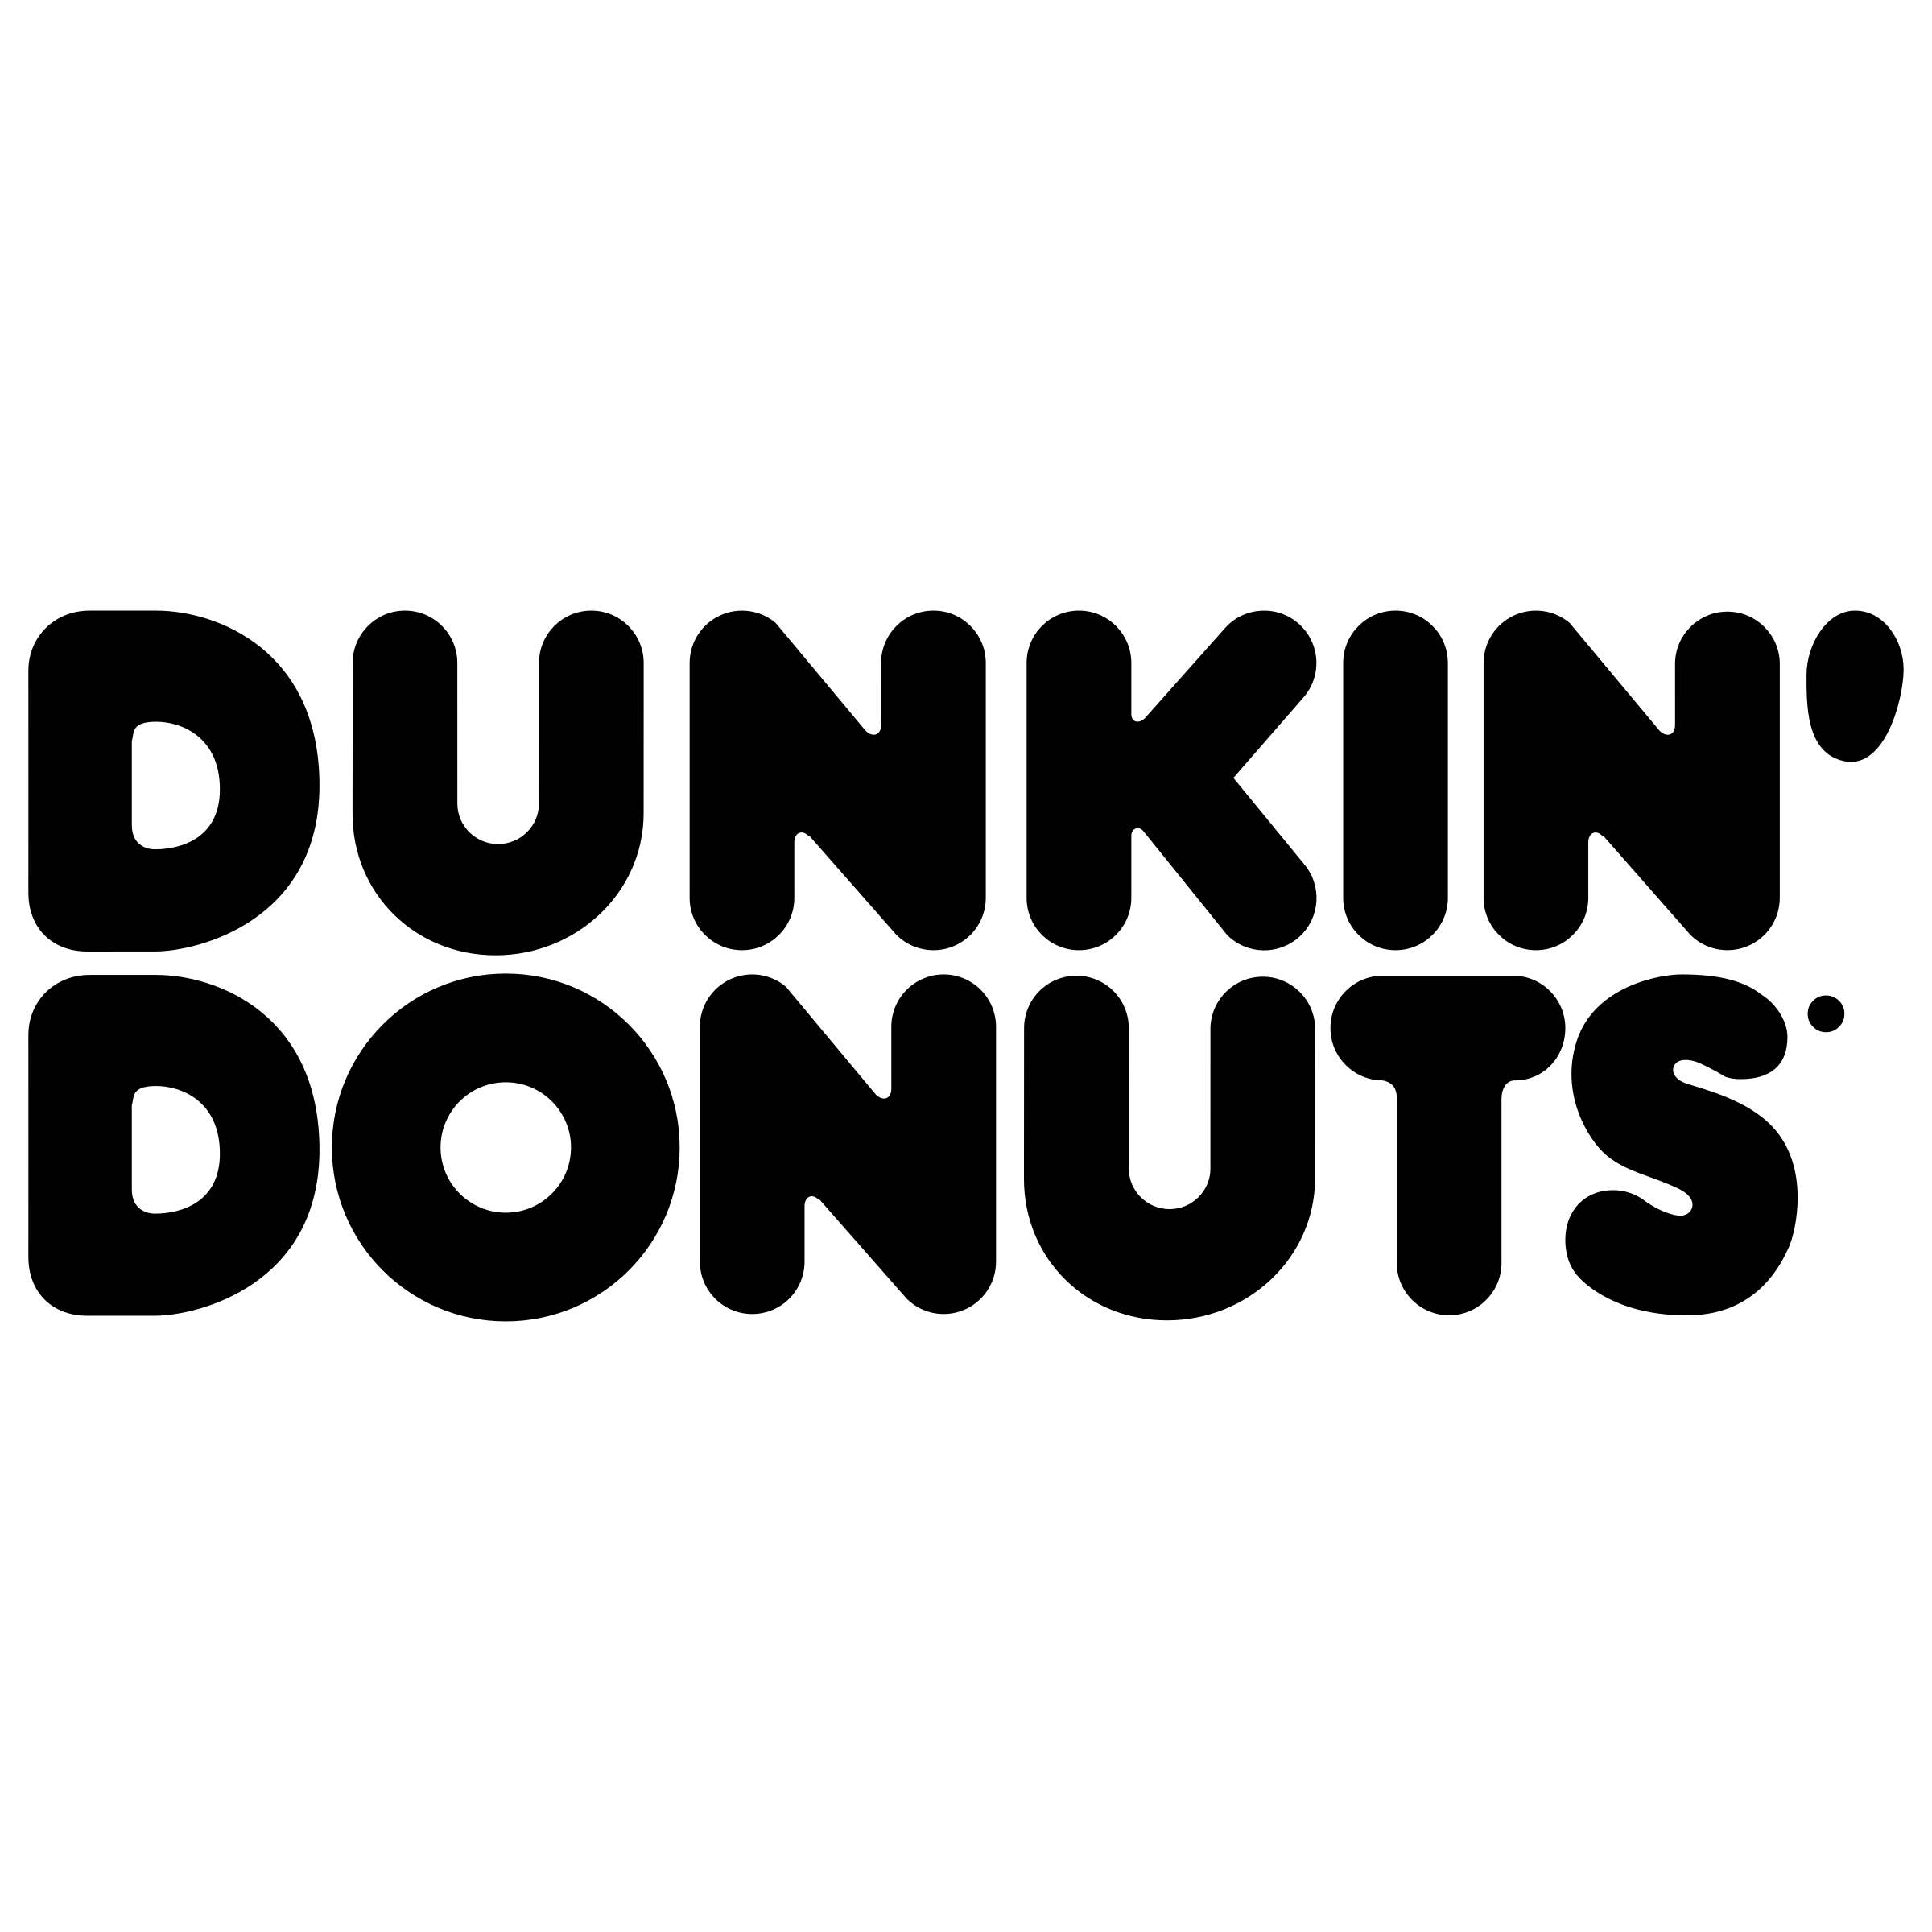 Dunkin' Donuts Logo - Dunkin' Donuts Logo PNG Transparent & SVG Vector - Freebie Supply